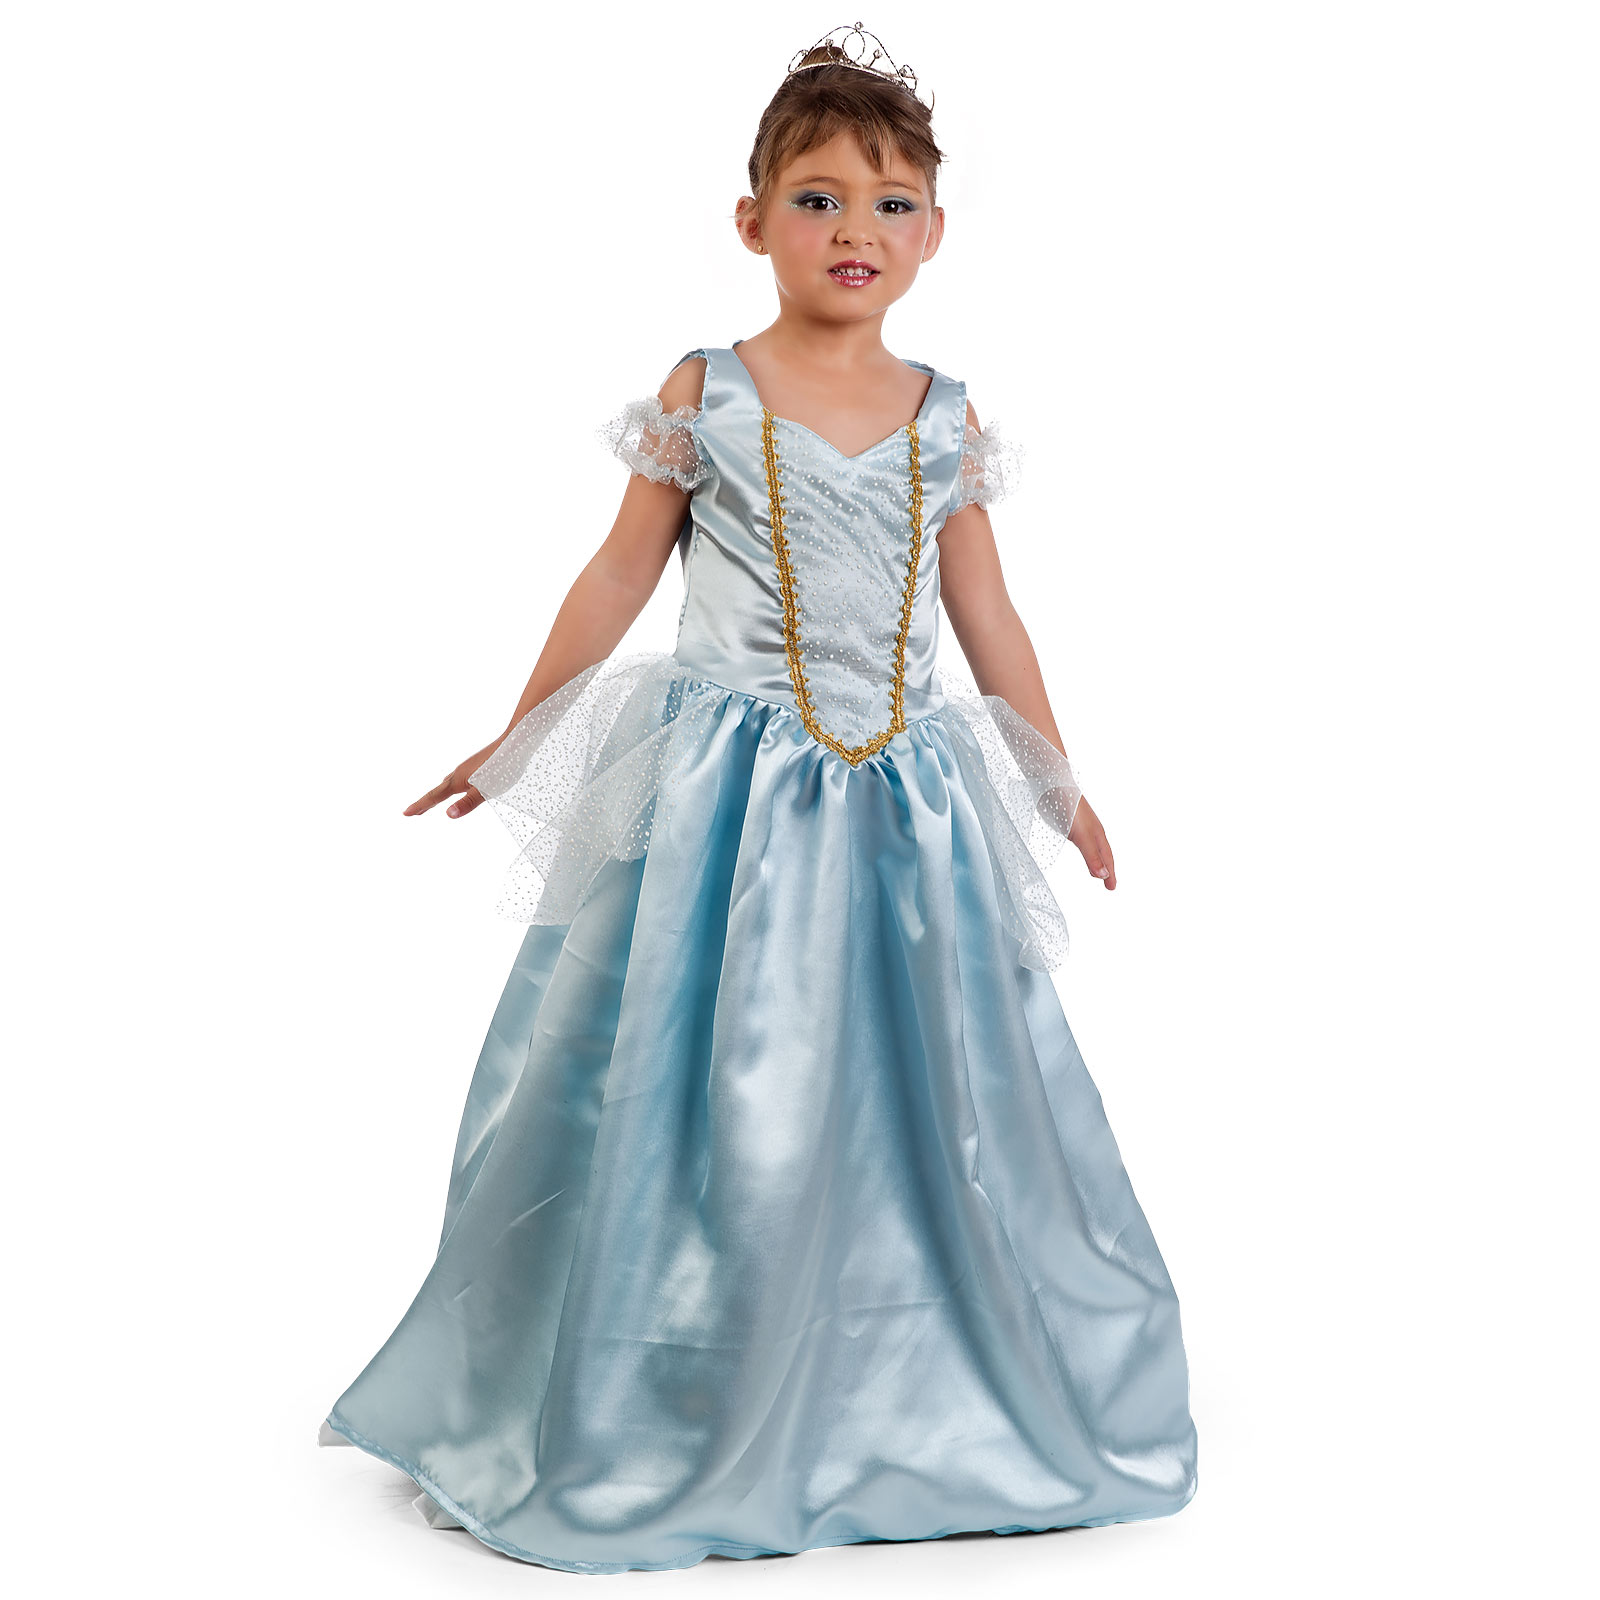 Cinderella Princess Dress Turquoise - Children's Costume